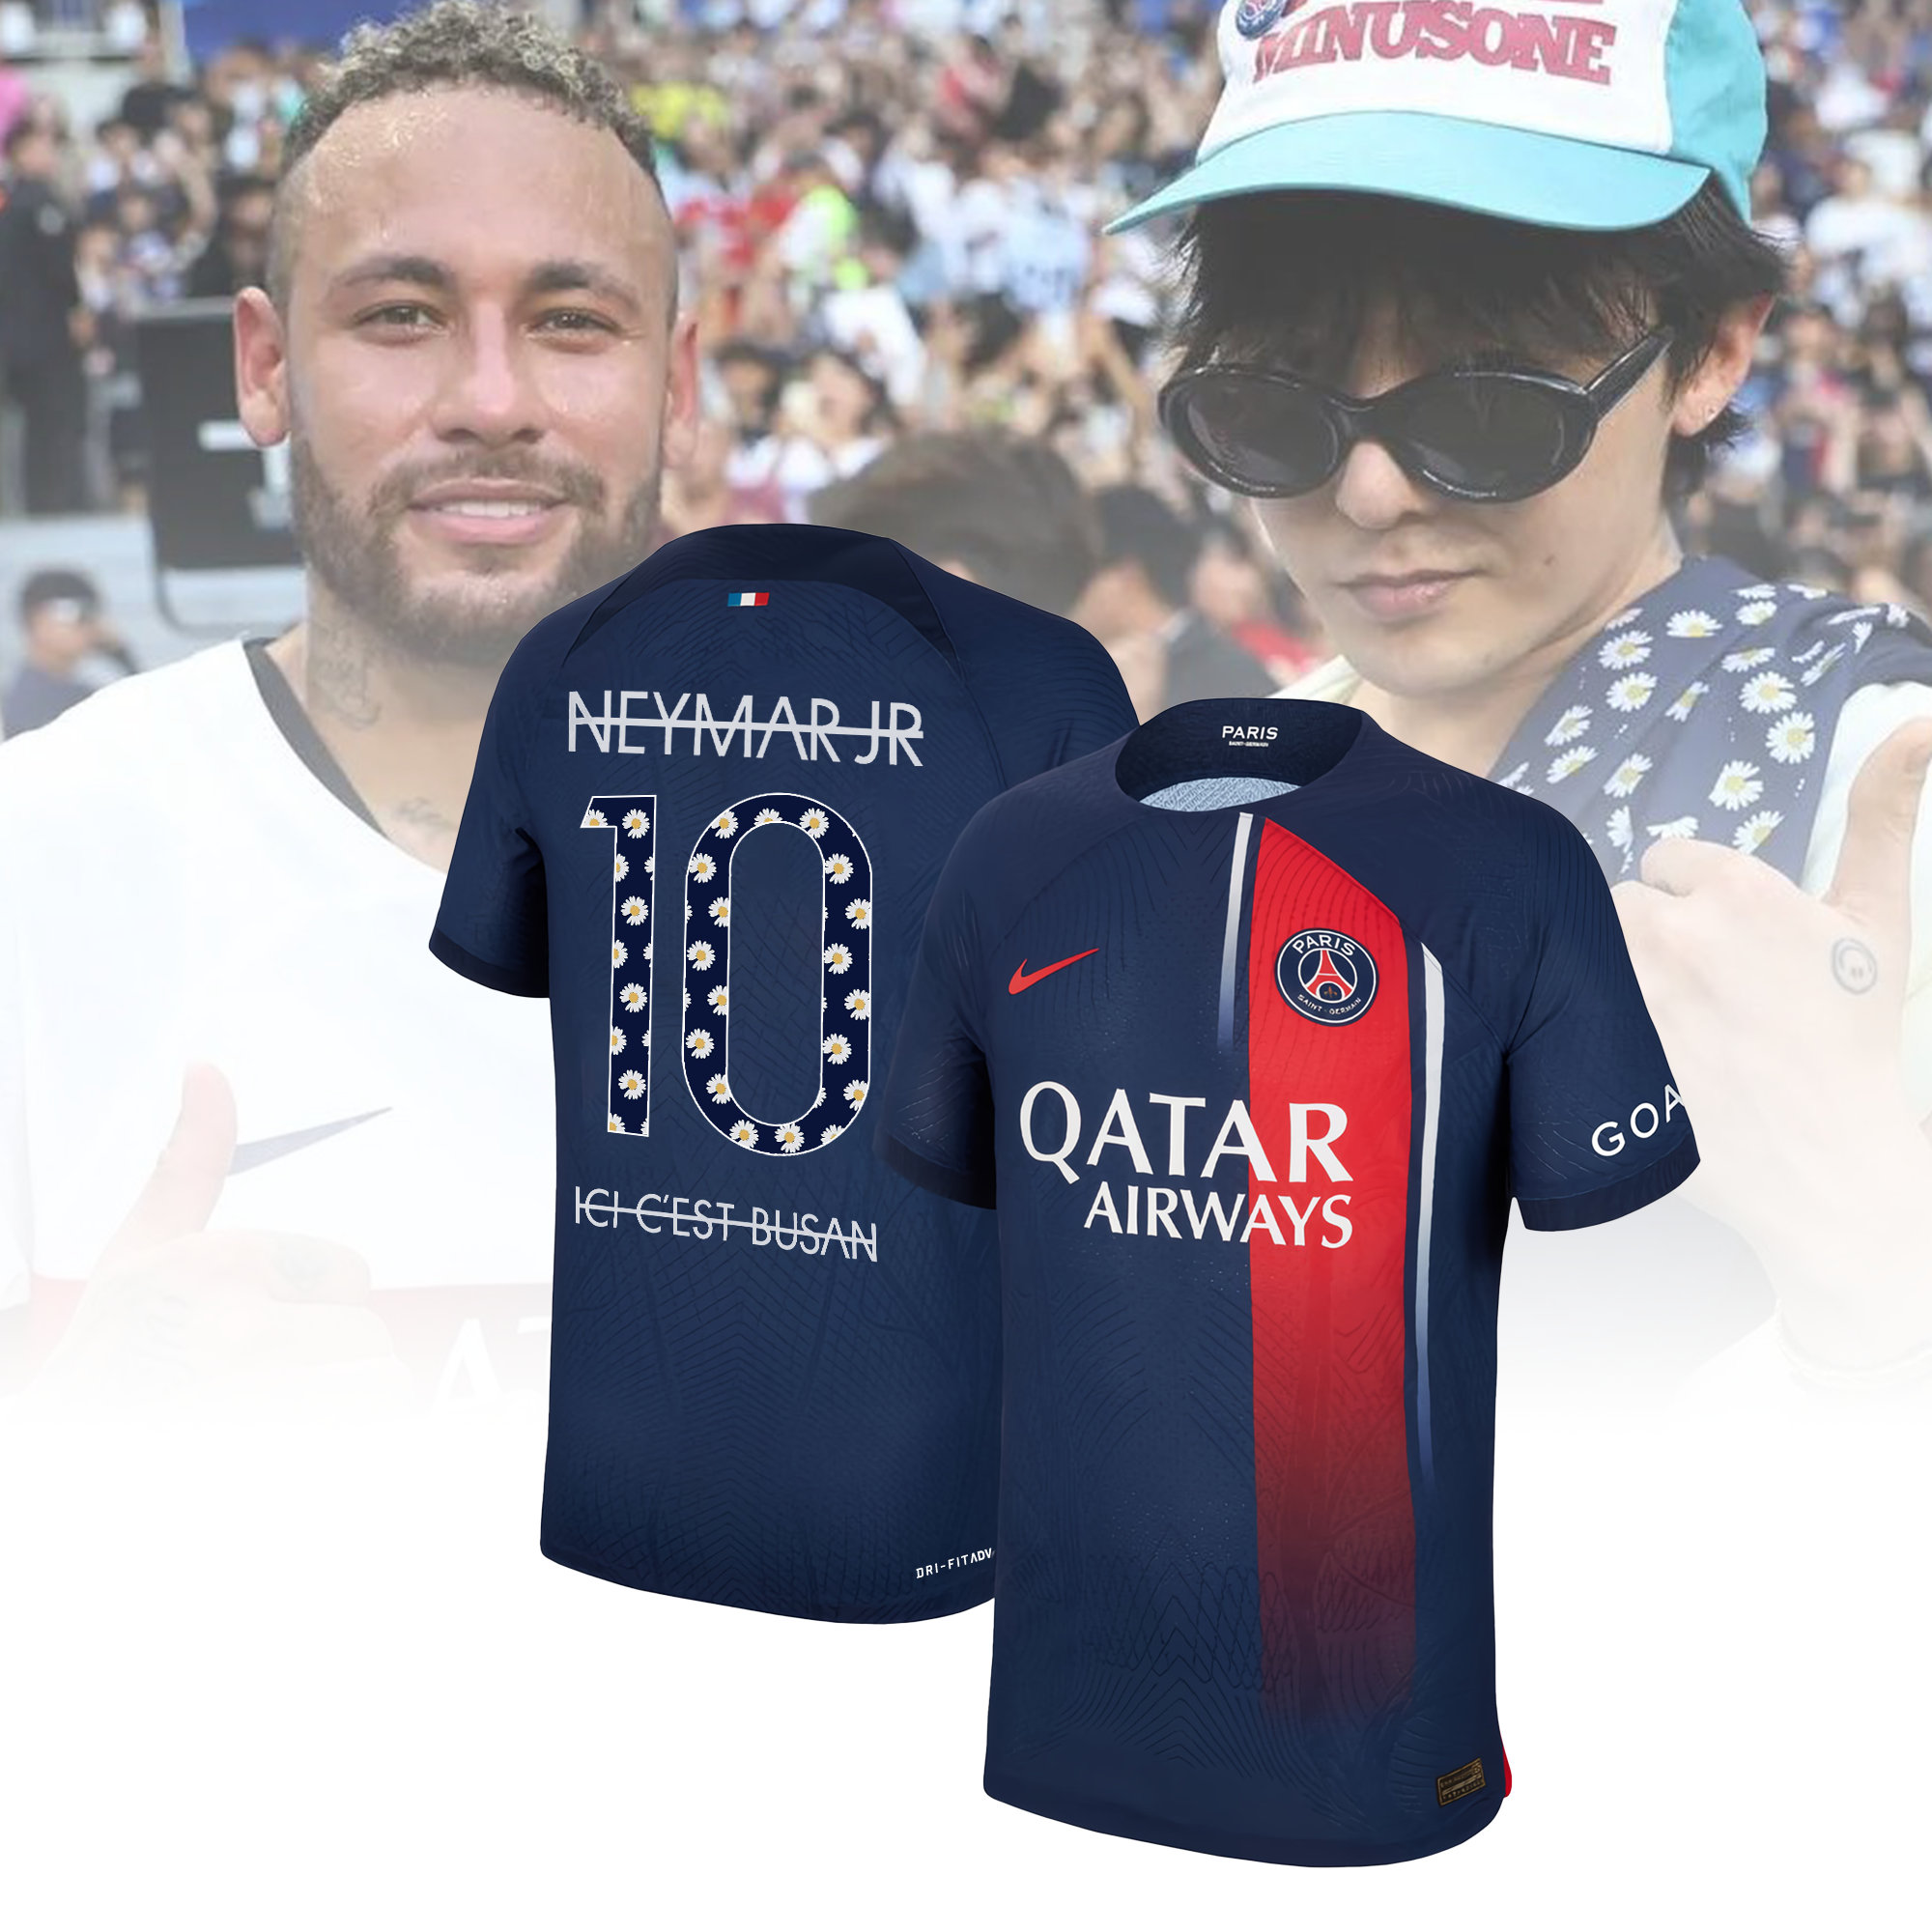 PSG PEACEMINUSONE Neymar10 Mサイズ